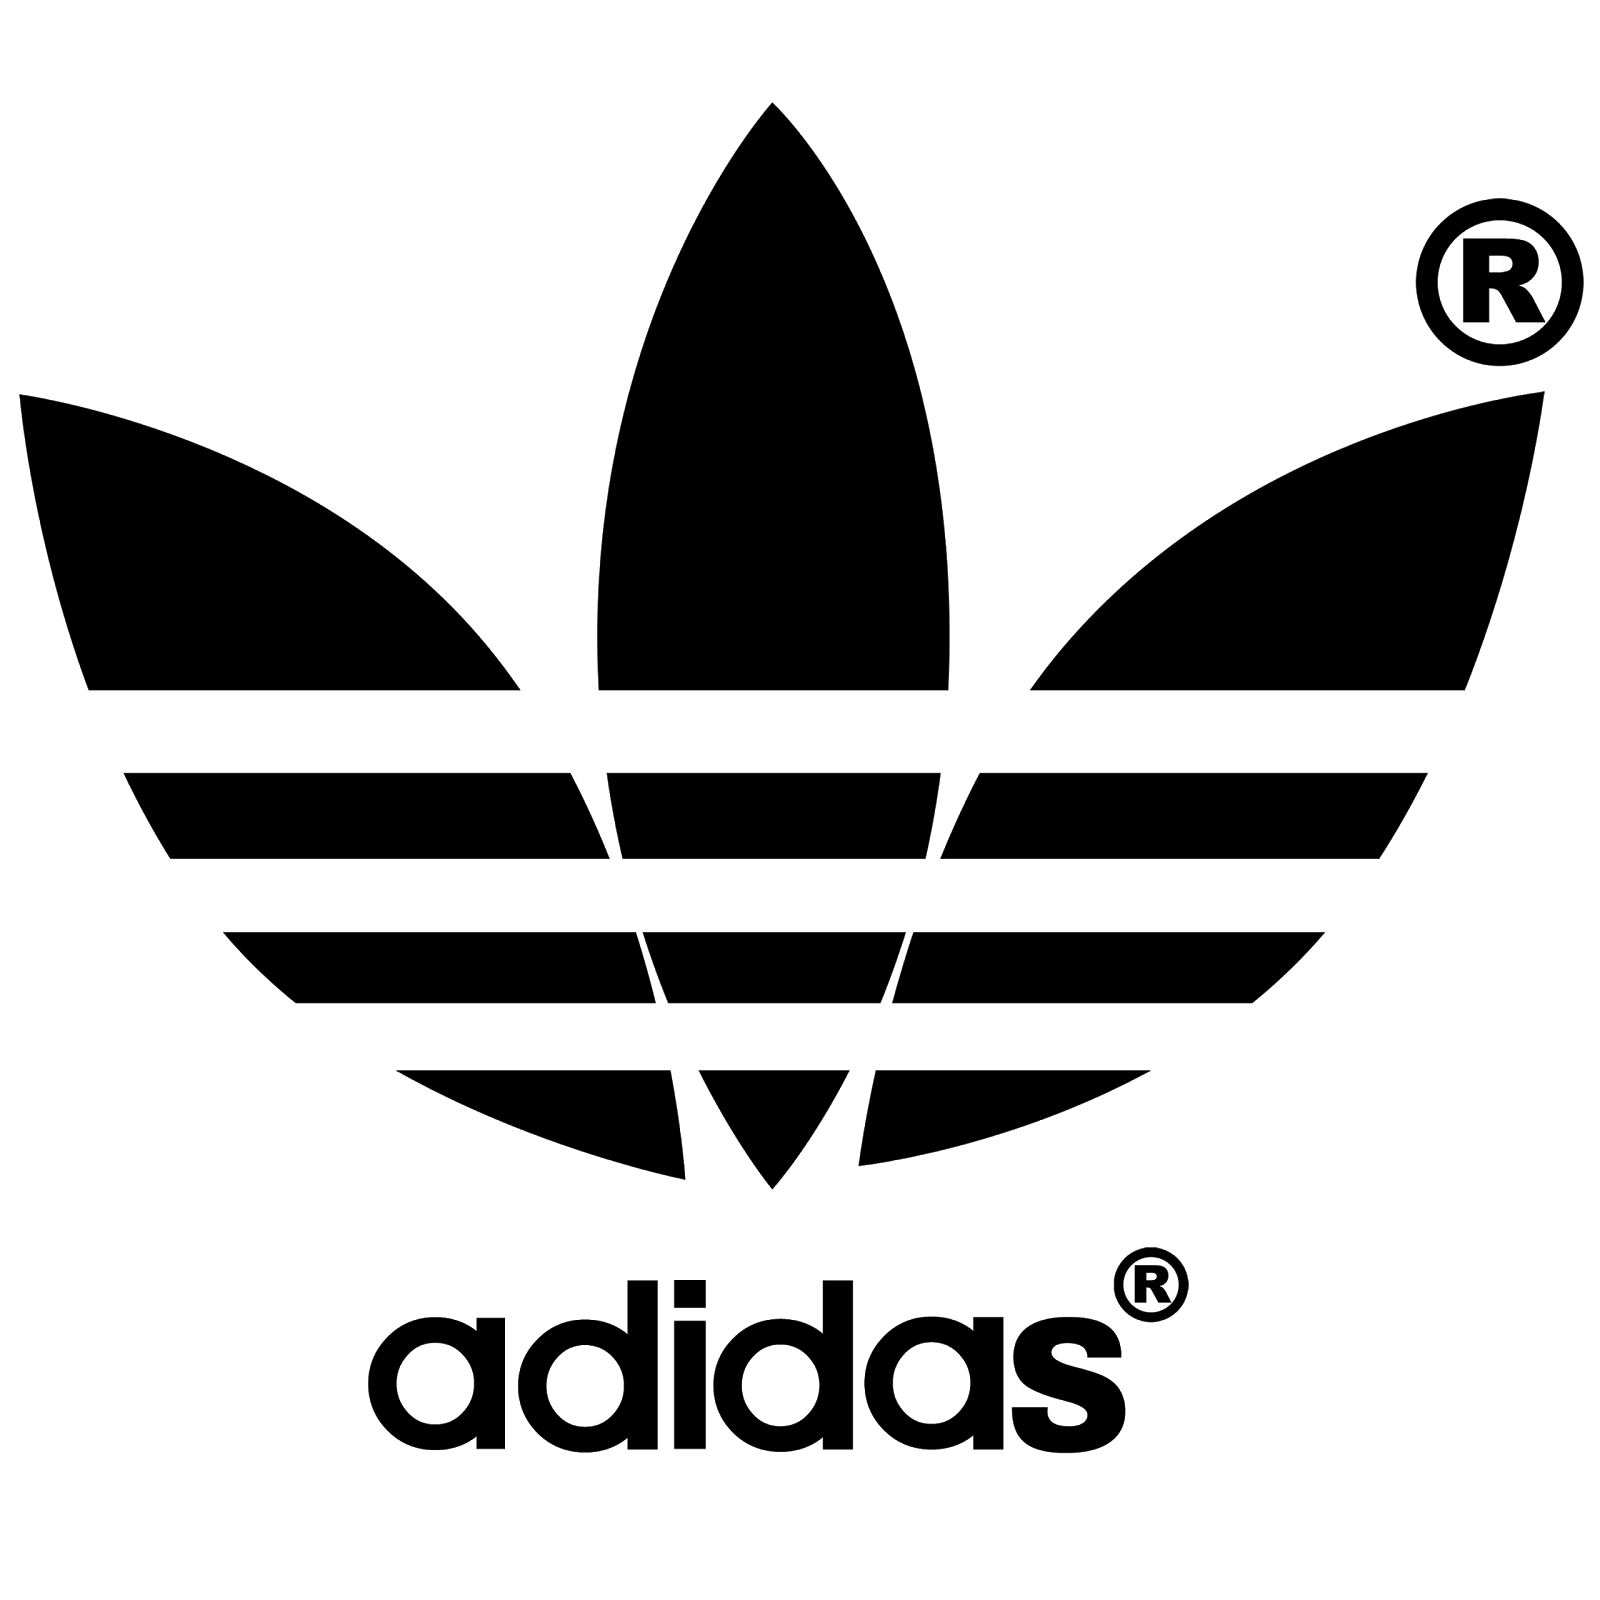 NADIA Art Logo: Adidas Logo